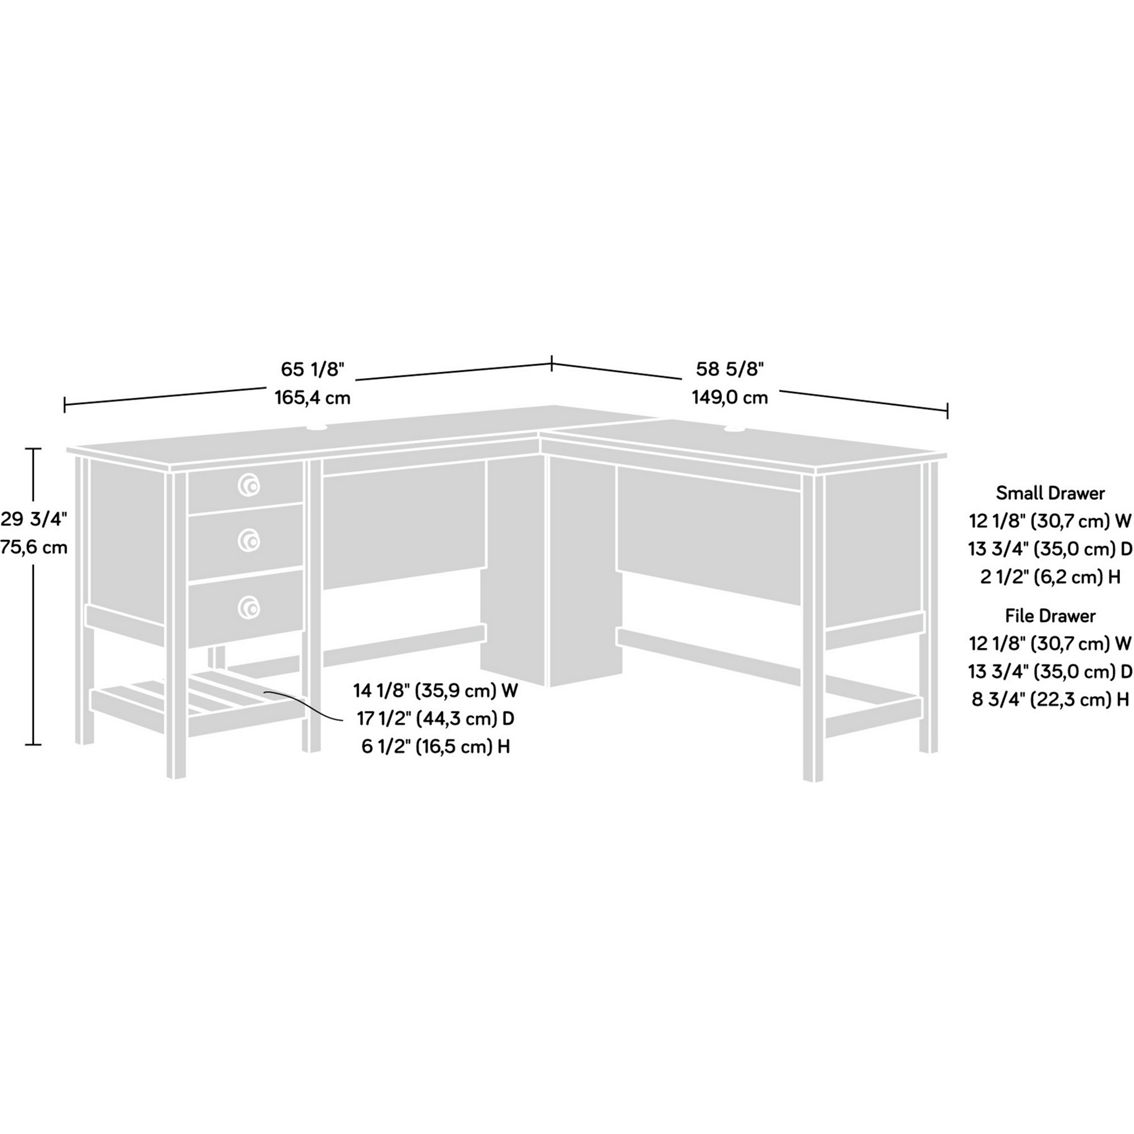 Sauder L Shaped Home Office Desk, Rustic Cedar - Image 2 of 2